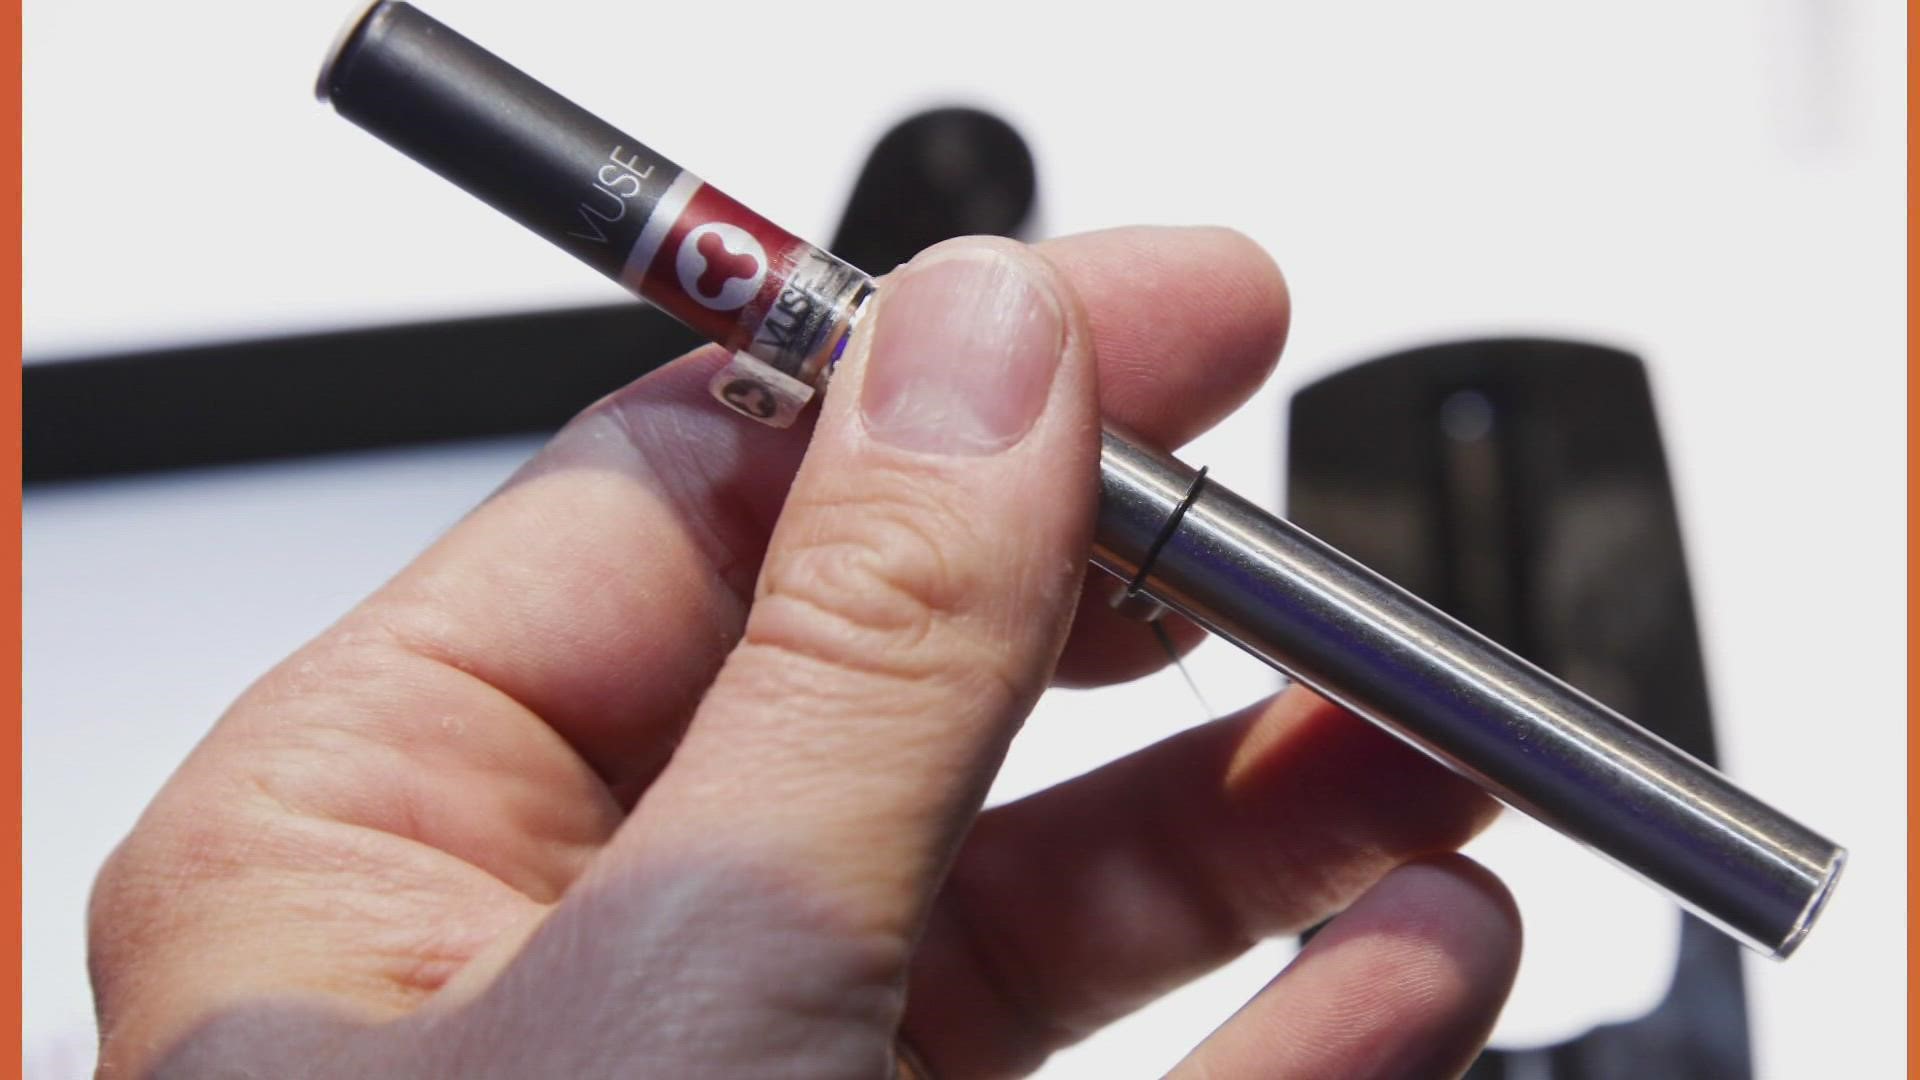 Reynolds Files for FDA Review of Vuse E-Cigarettes - WSJ